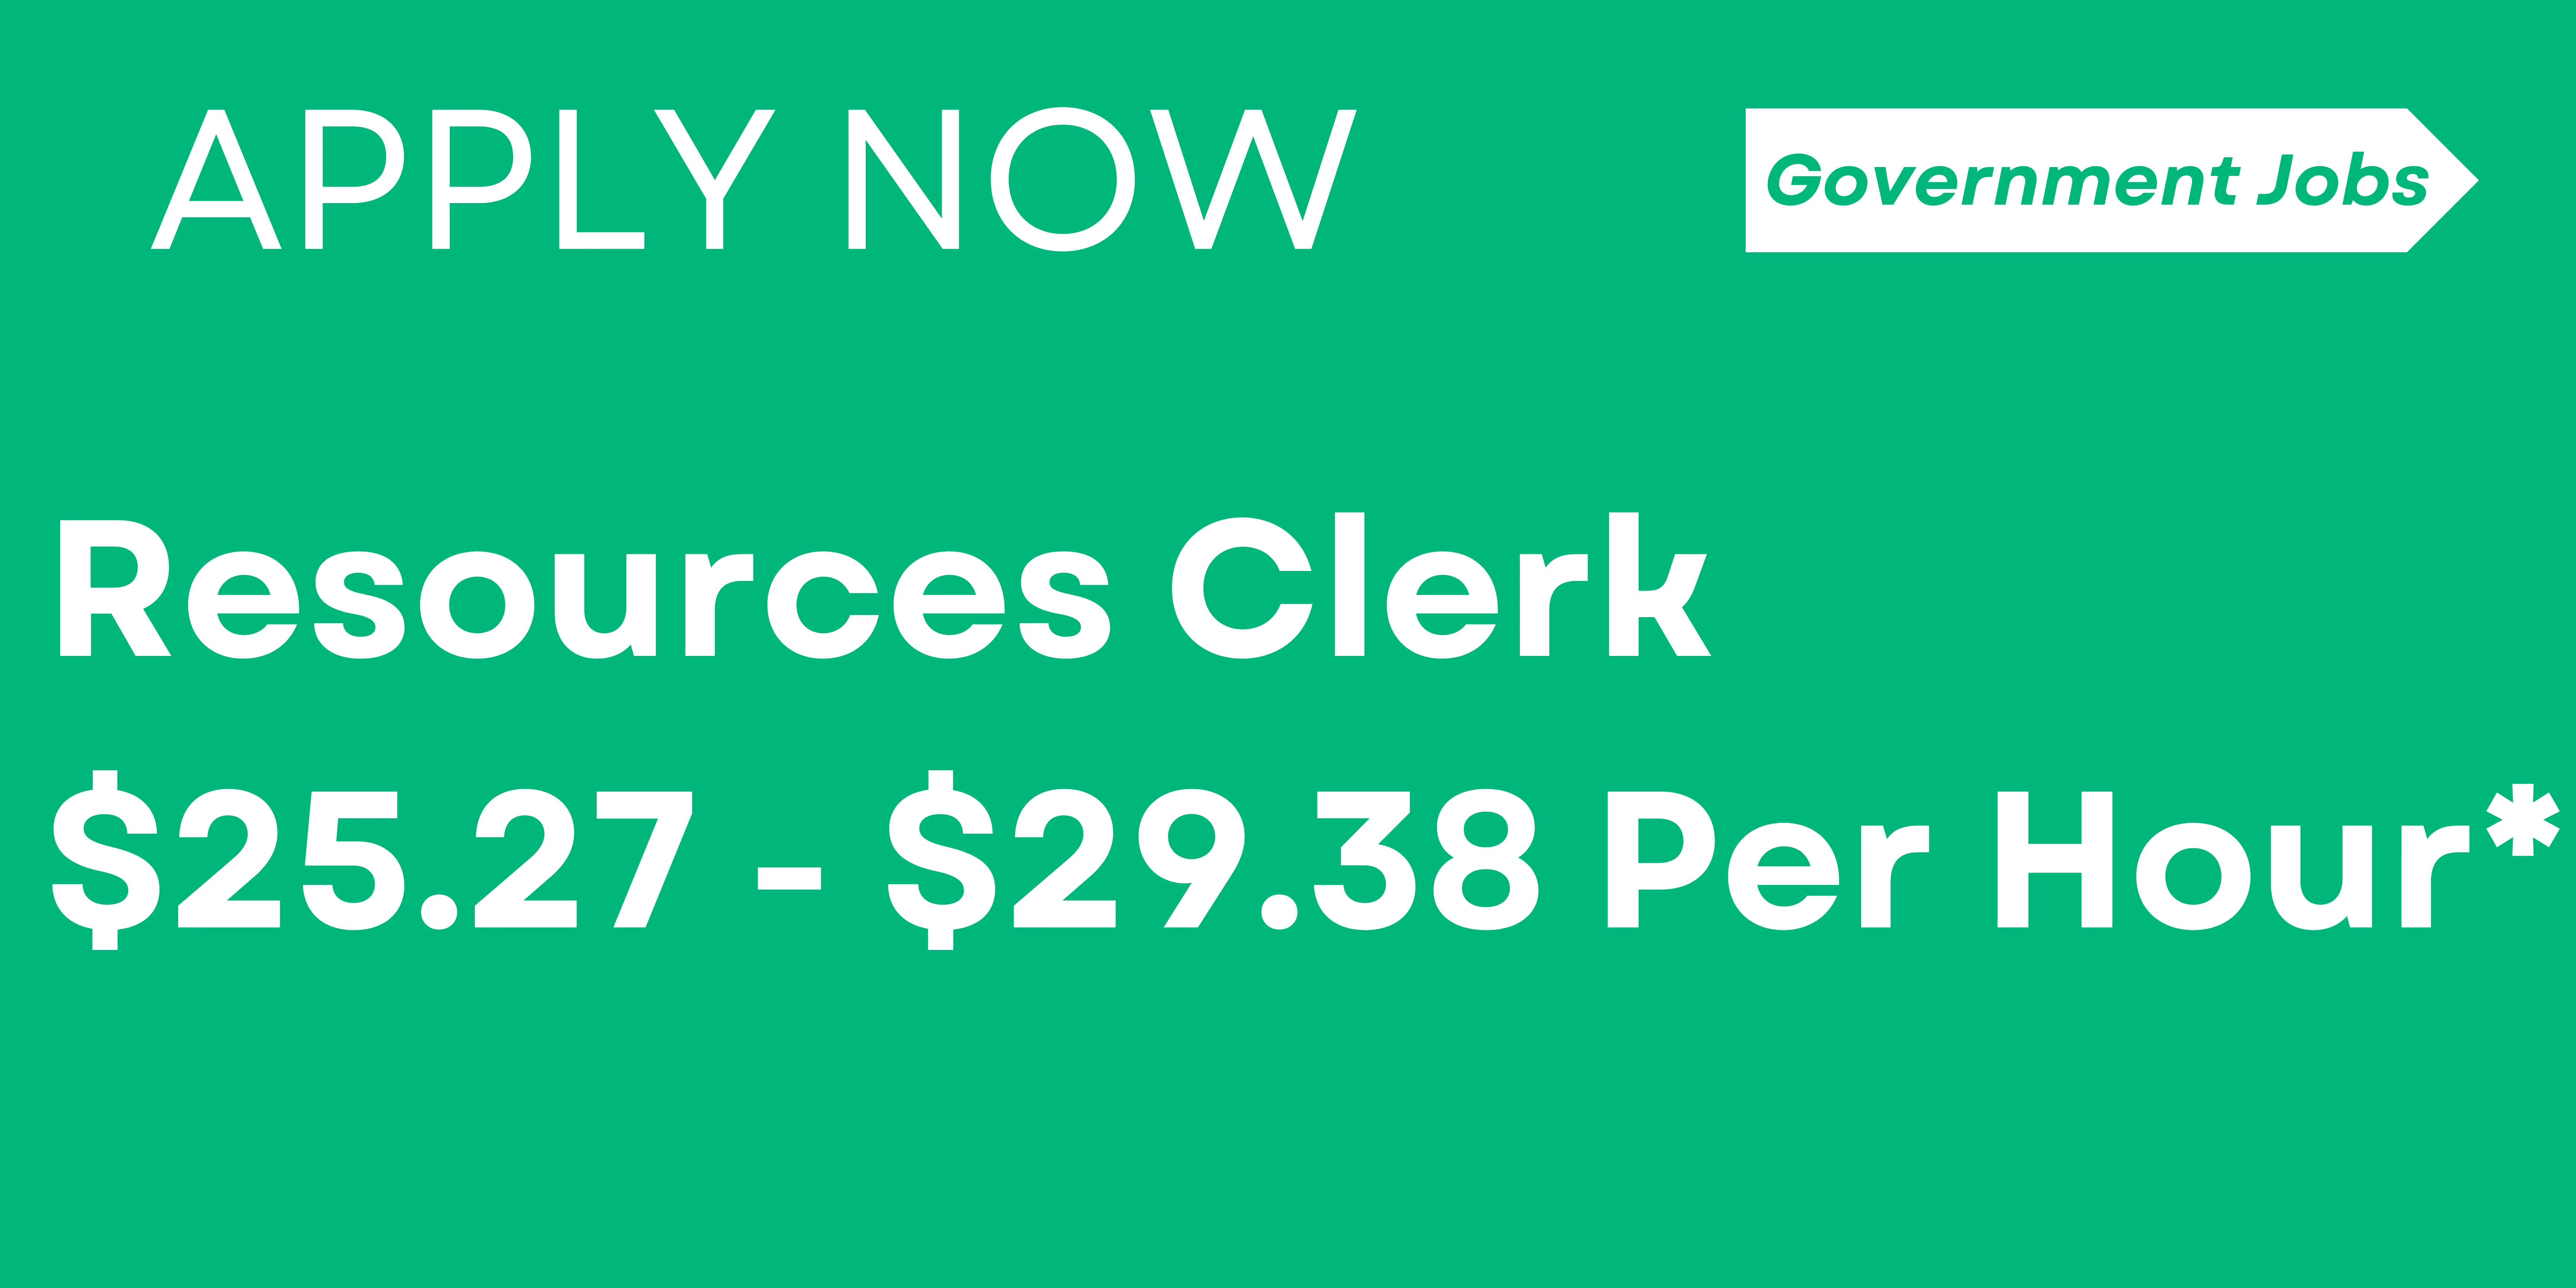 Resources Clerk